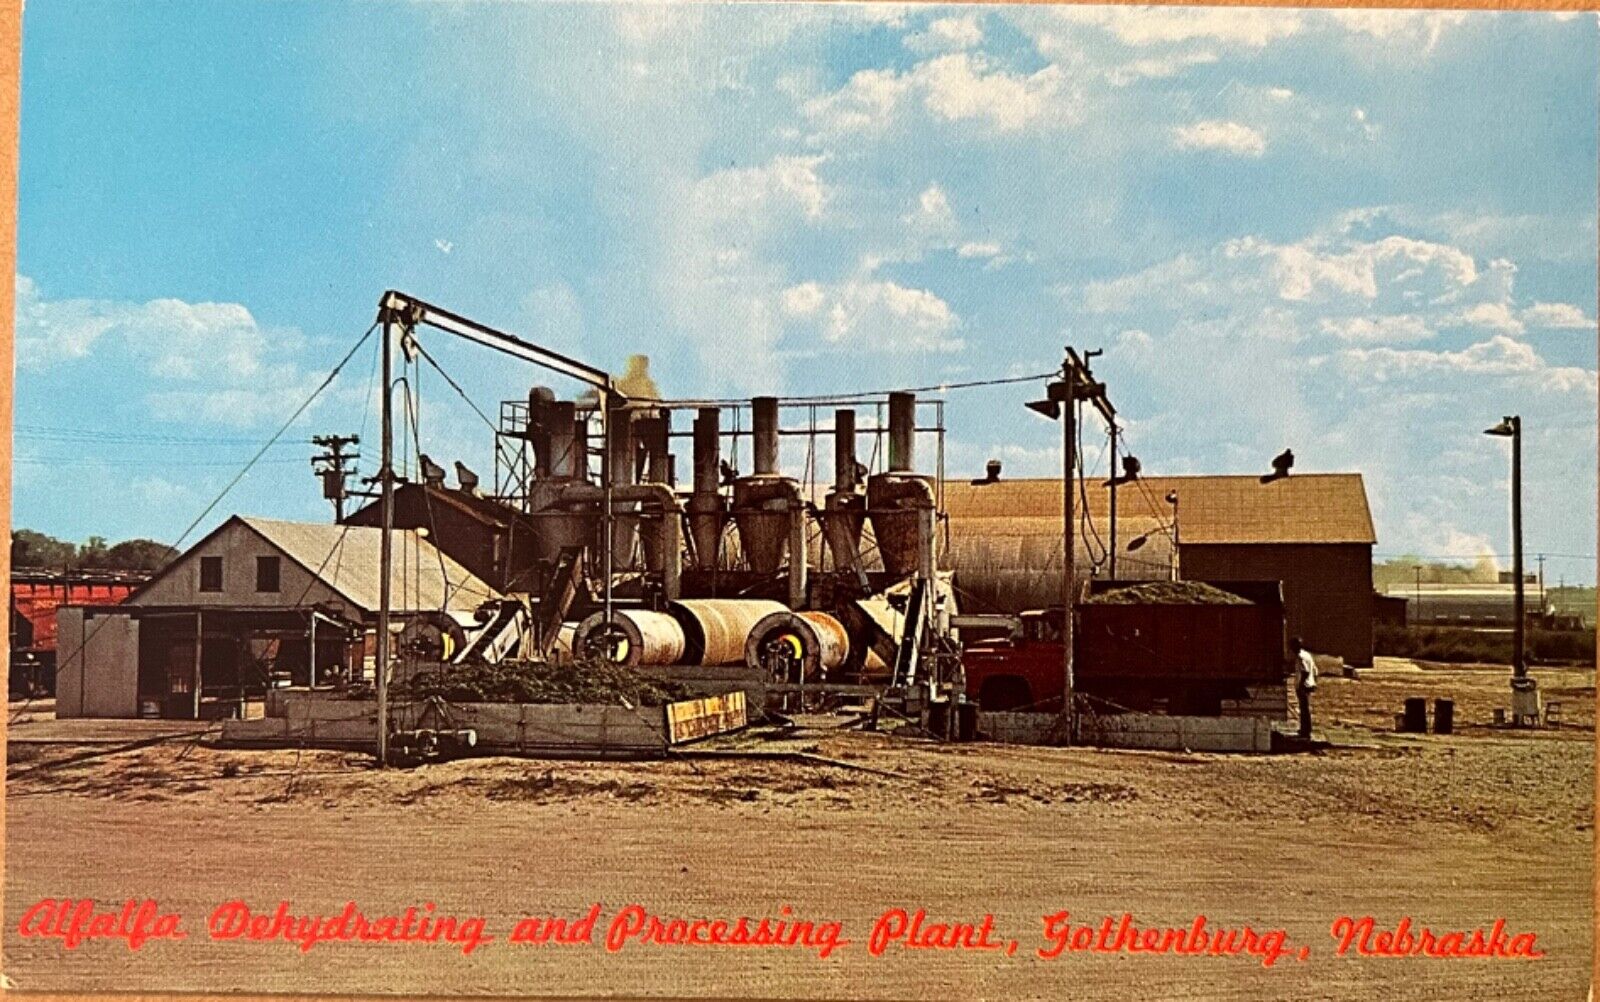 Gothenburg Nebraska Alfalfa Processing Plant Old Truck Vintage Postcard c1960